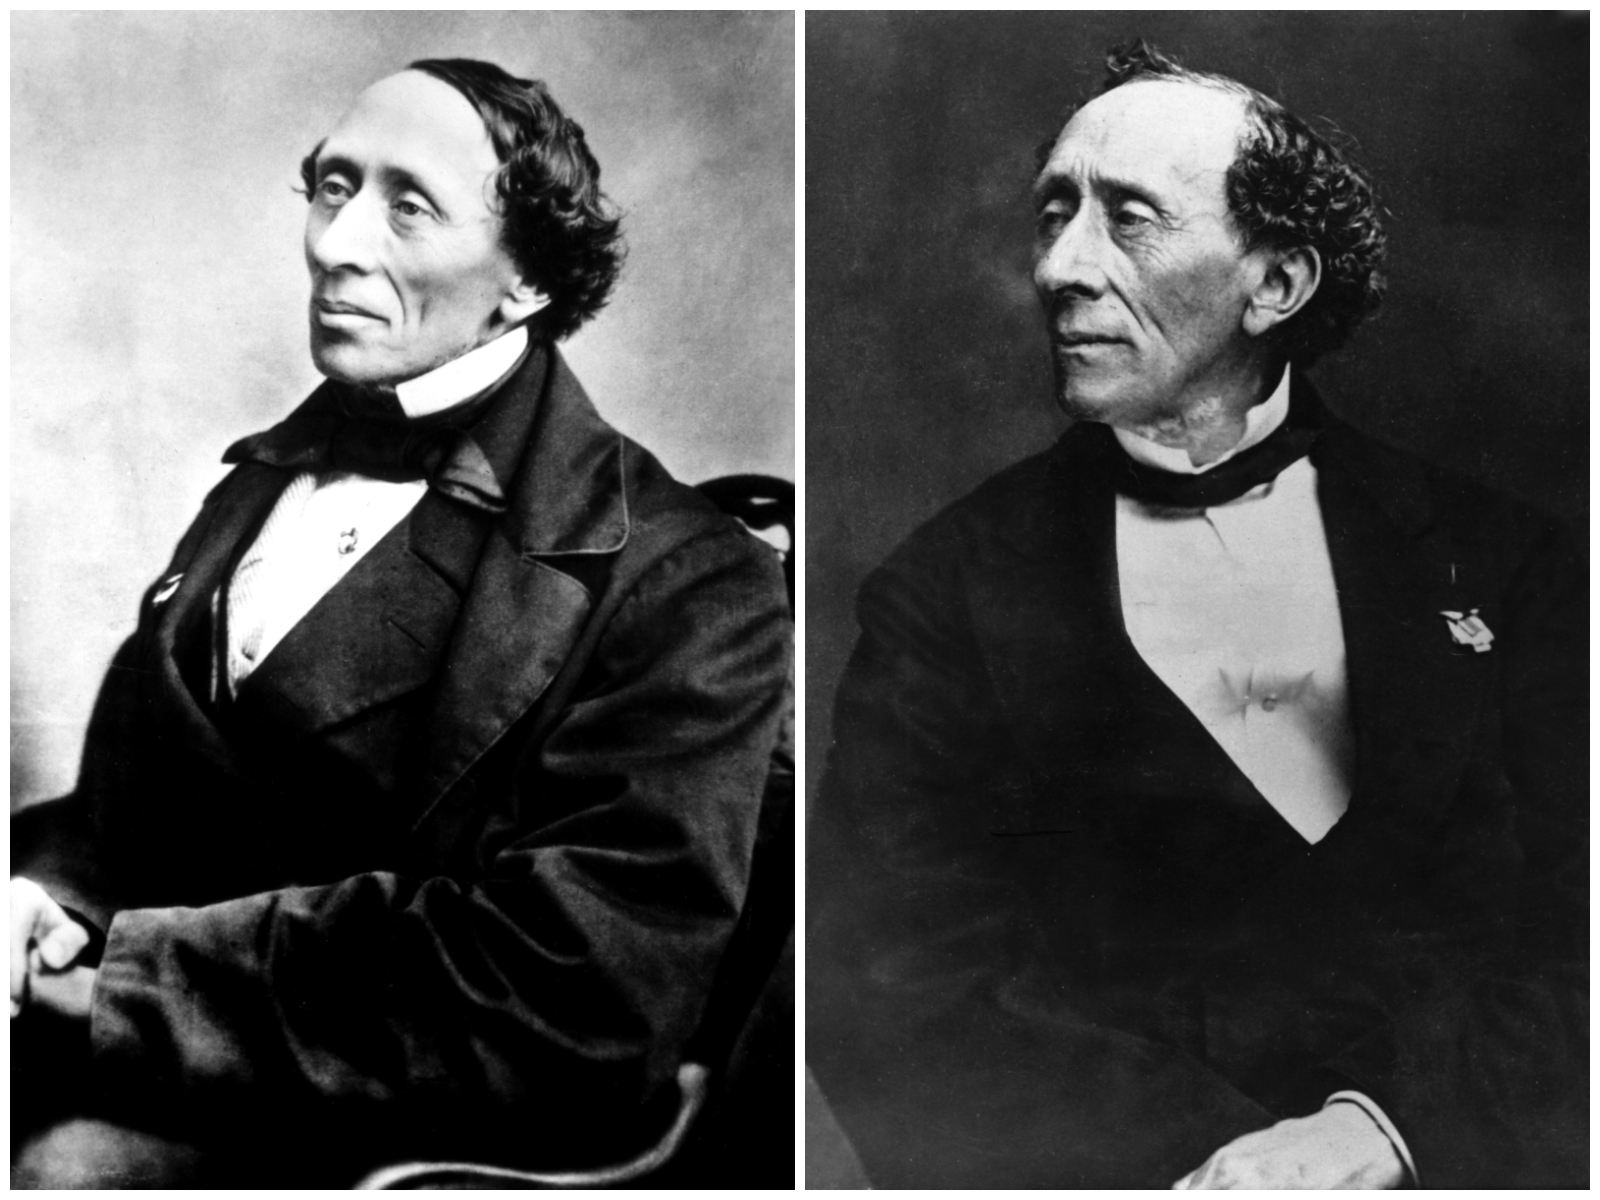 Portraits of Hans Christian Andersen